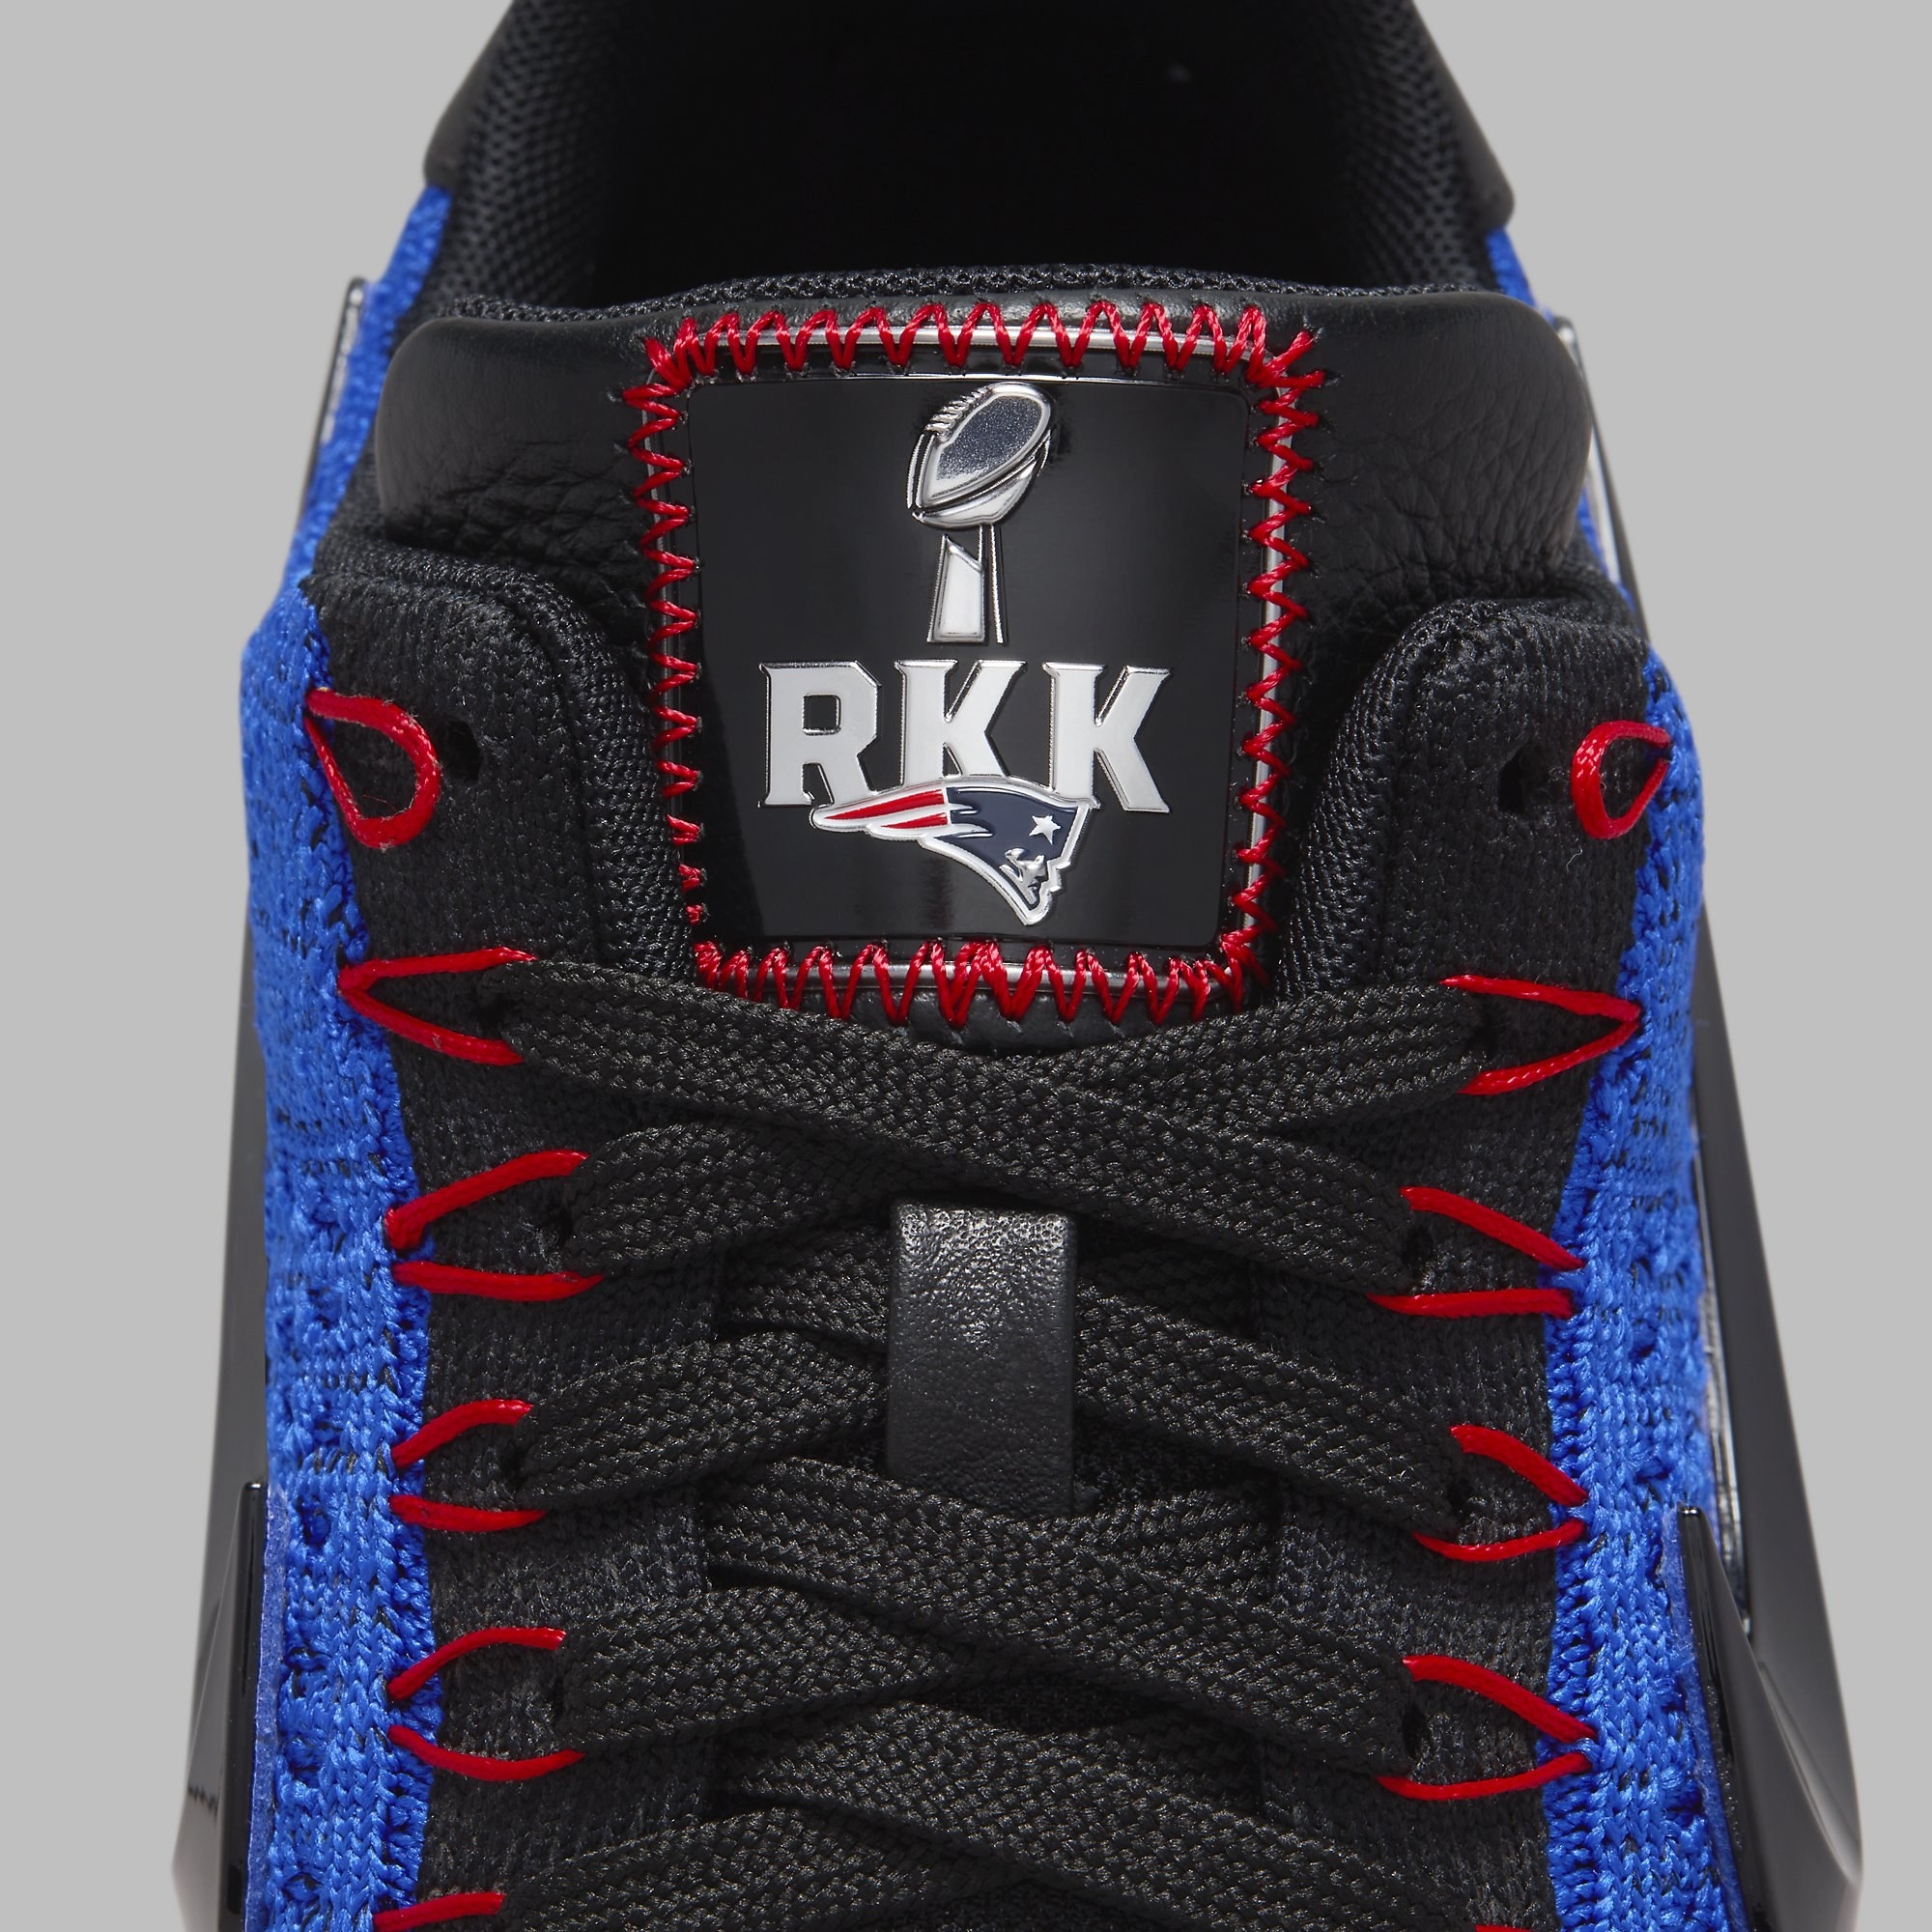 Robert Kraft x Nike Air Force 1 Ultra Flyknit Low RKK Patriots Release Date FV4079-400 Tongue Detail